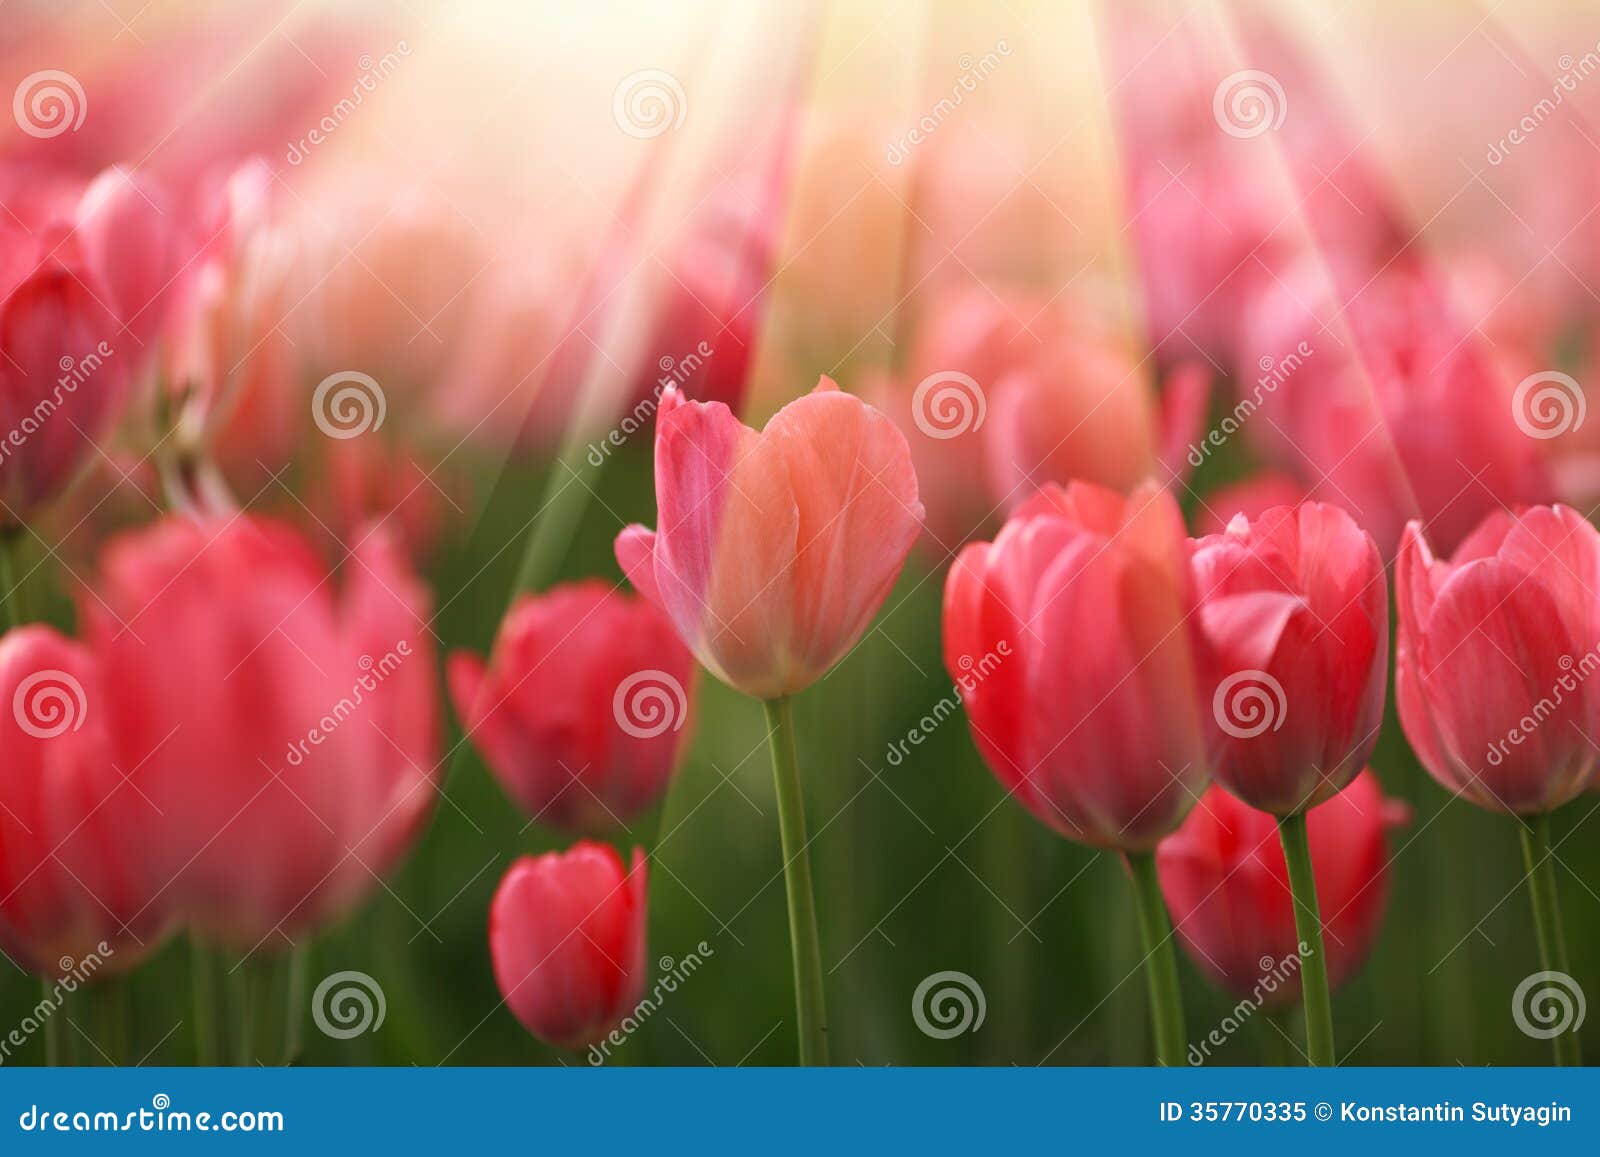 tulip flowers in sunshine